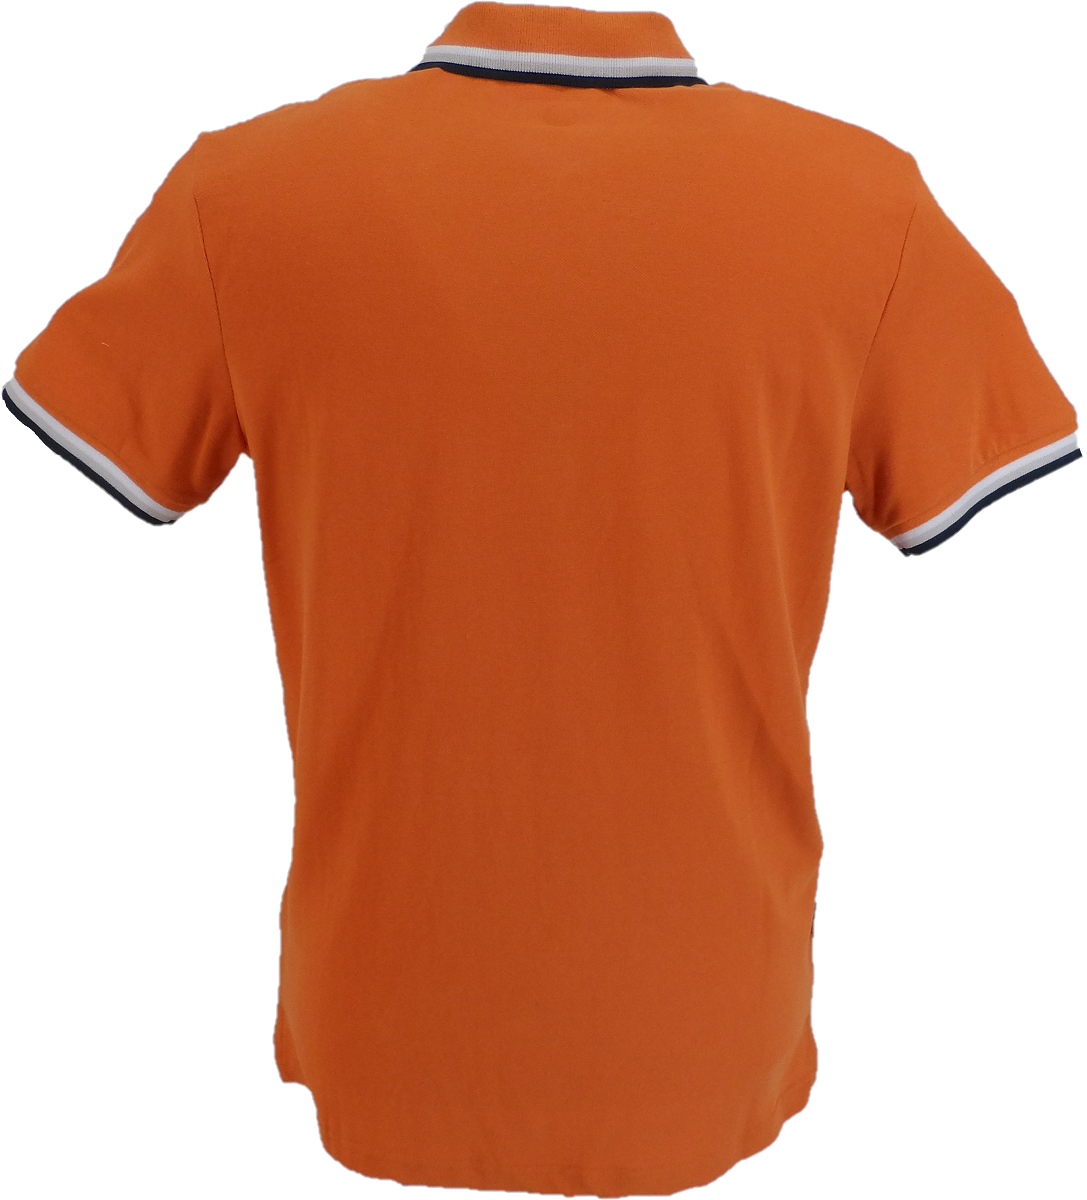 Polo Lambretta naranja/blanco/gris/azul marino retro logo objetivo 100% algodón